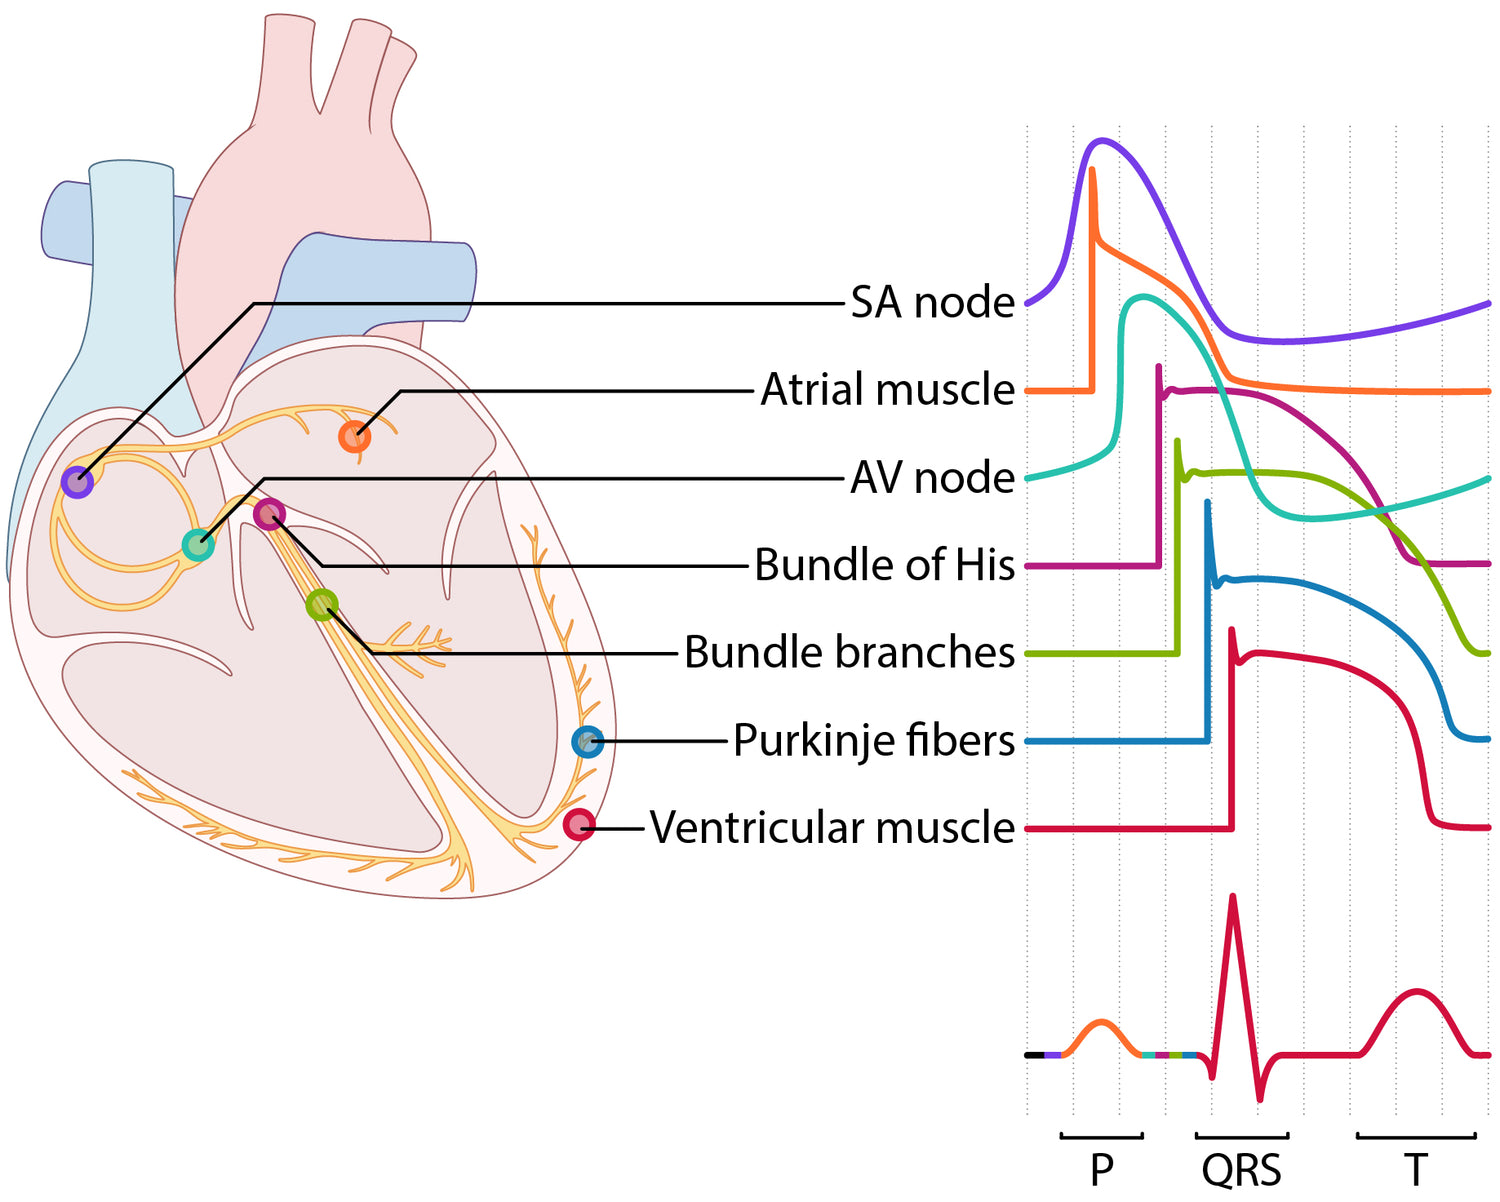 Cardiac action potentials